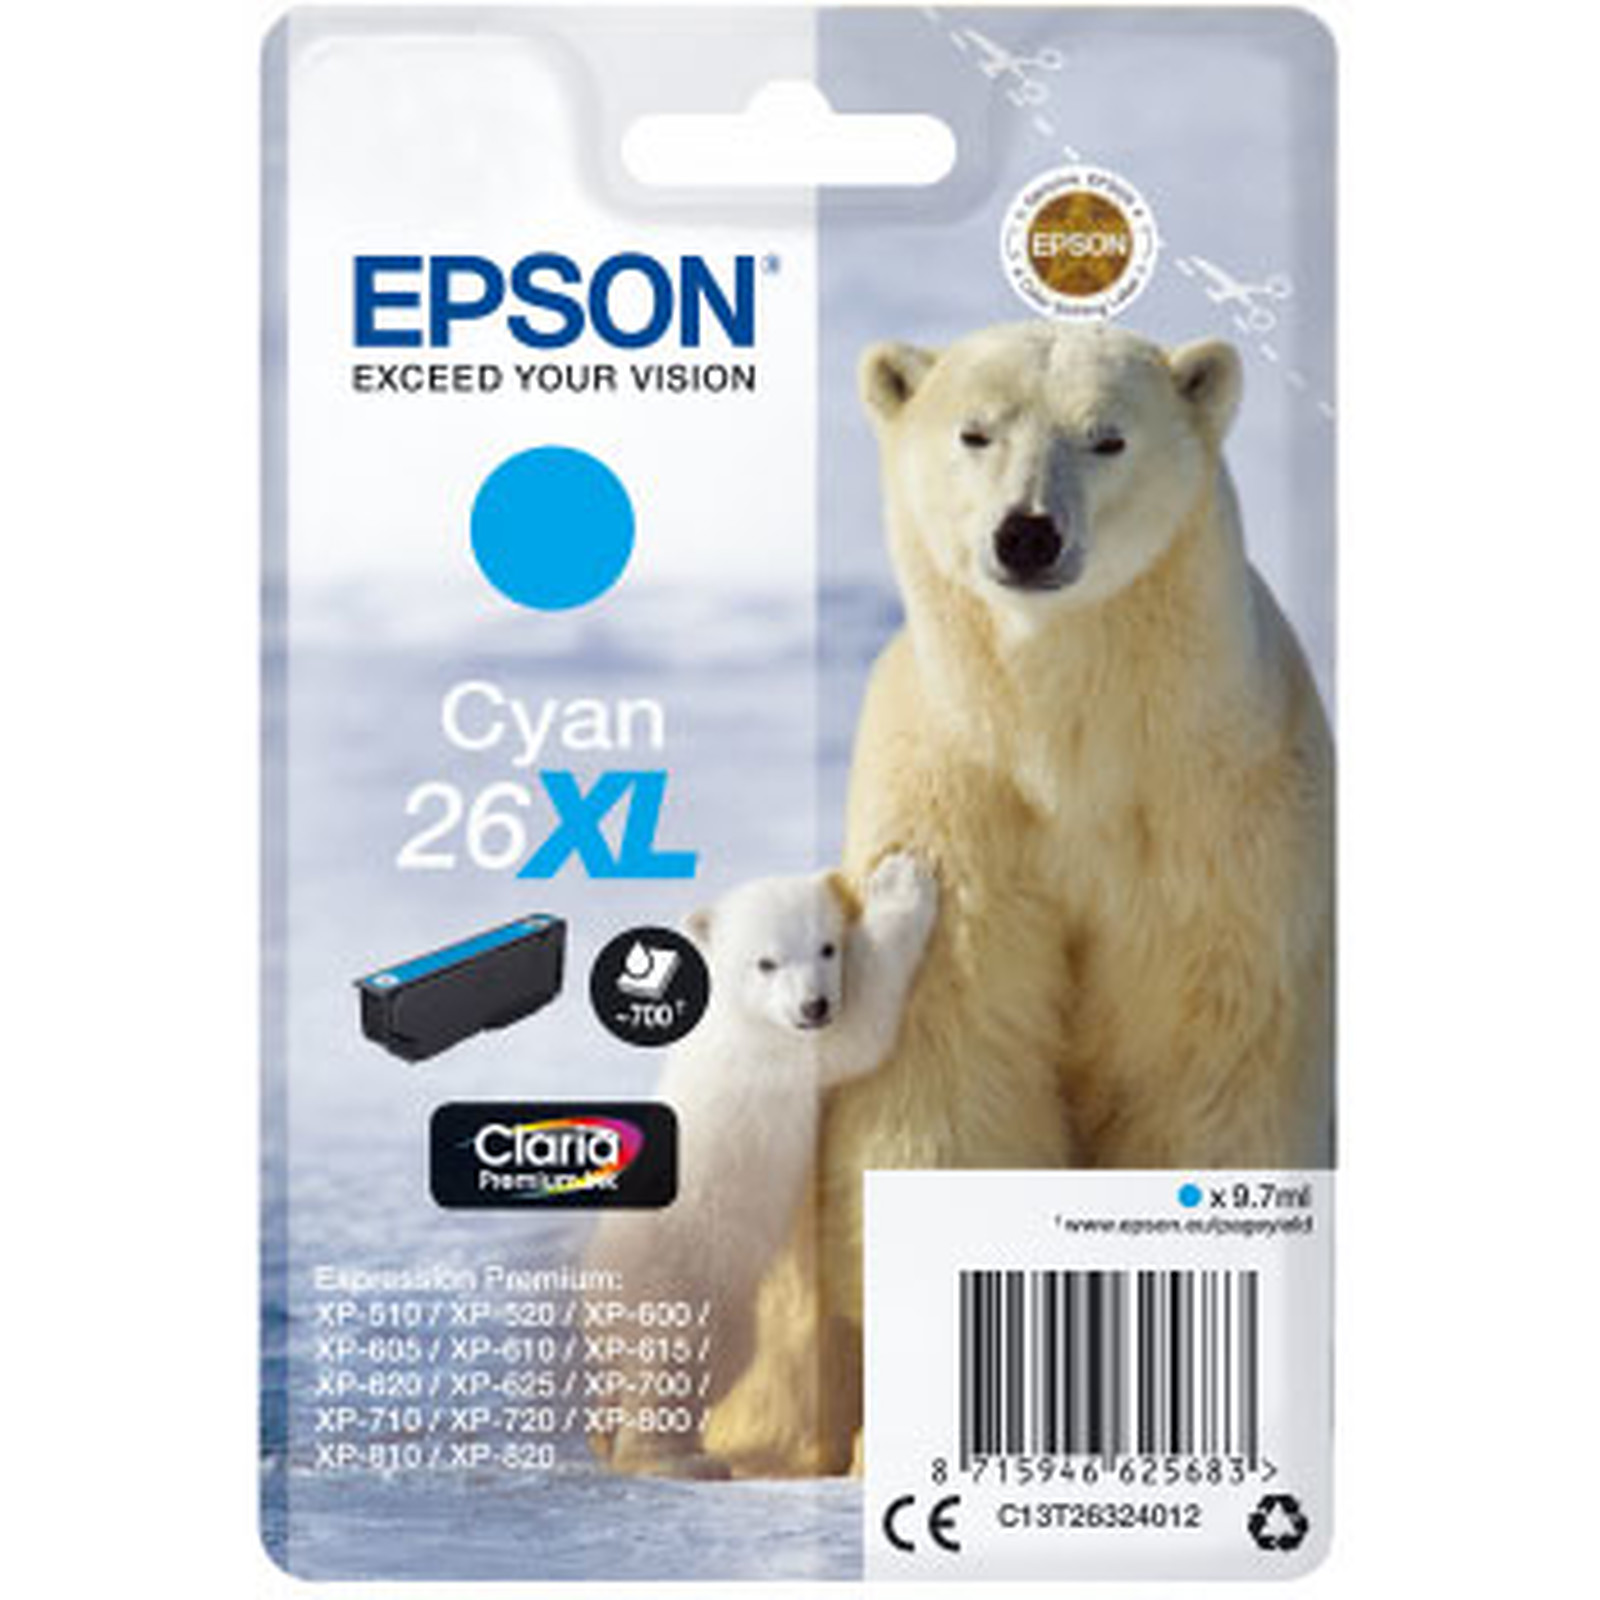 Epson Ours Polaire 26 XL Cyan - Cartouche imprimante Epson